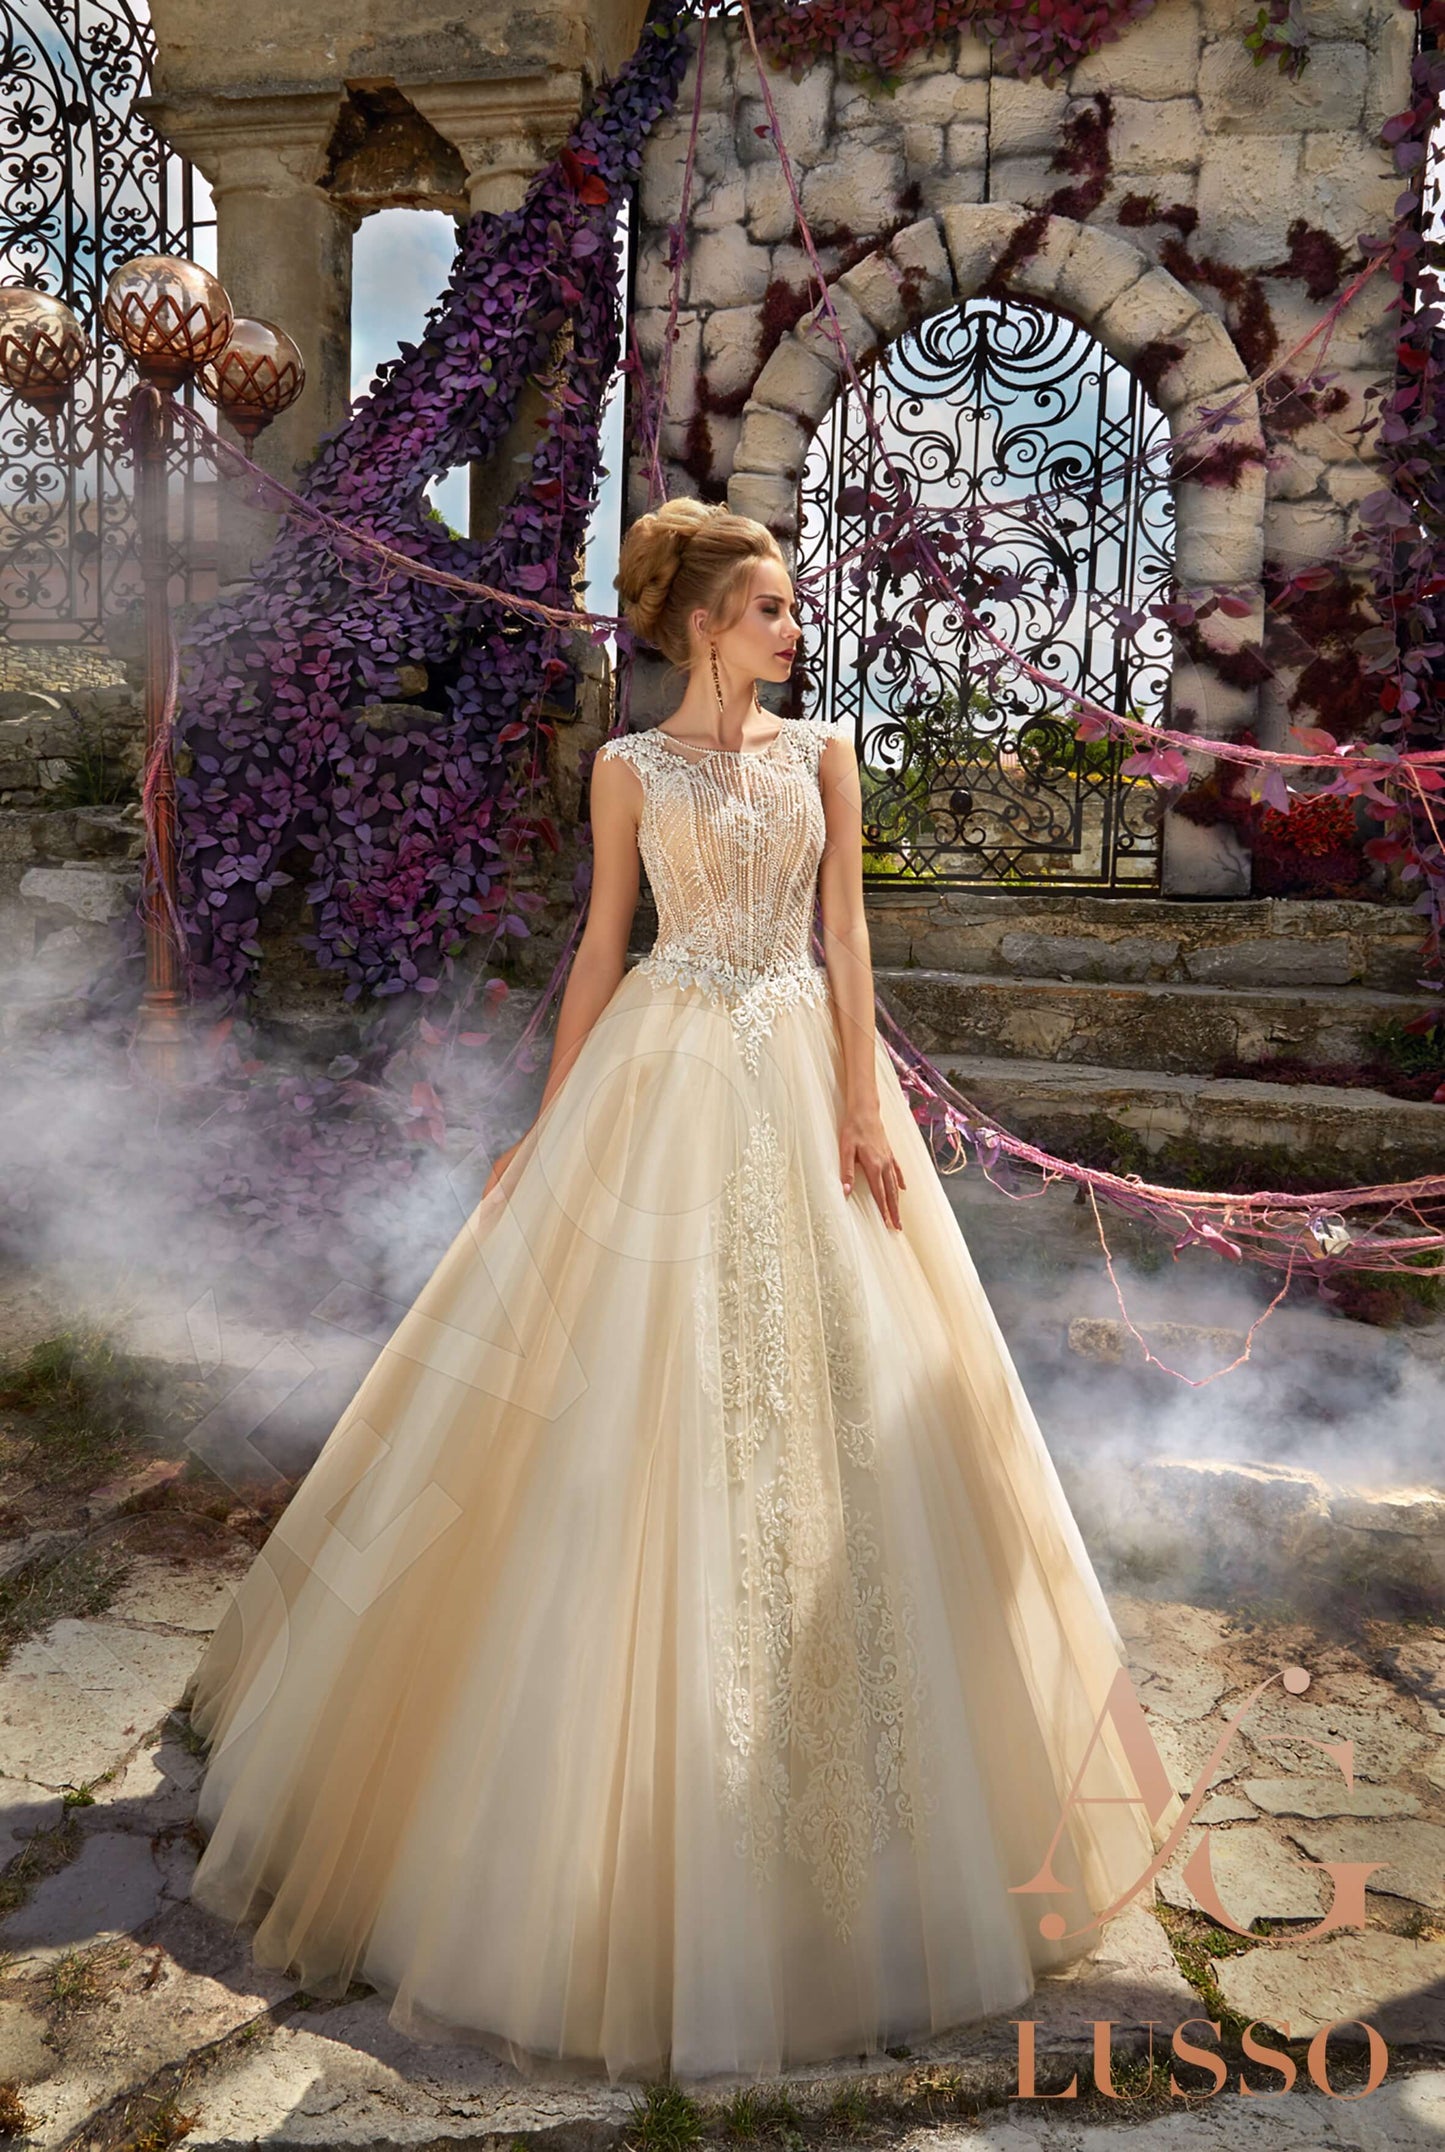 Arna Full back Princess/Ball Gown Short/ Cap sleeve Wedding Dress 7